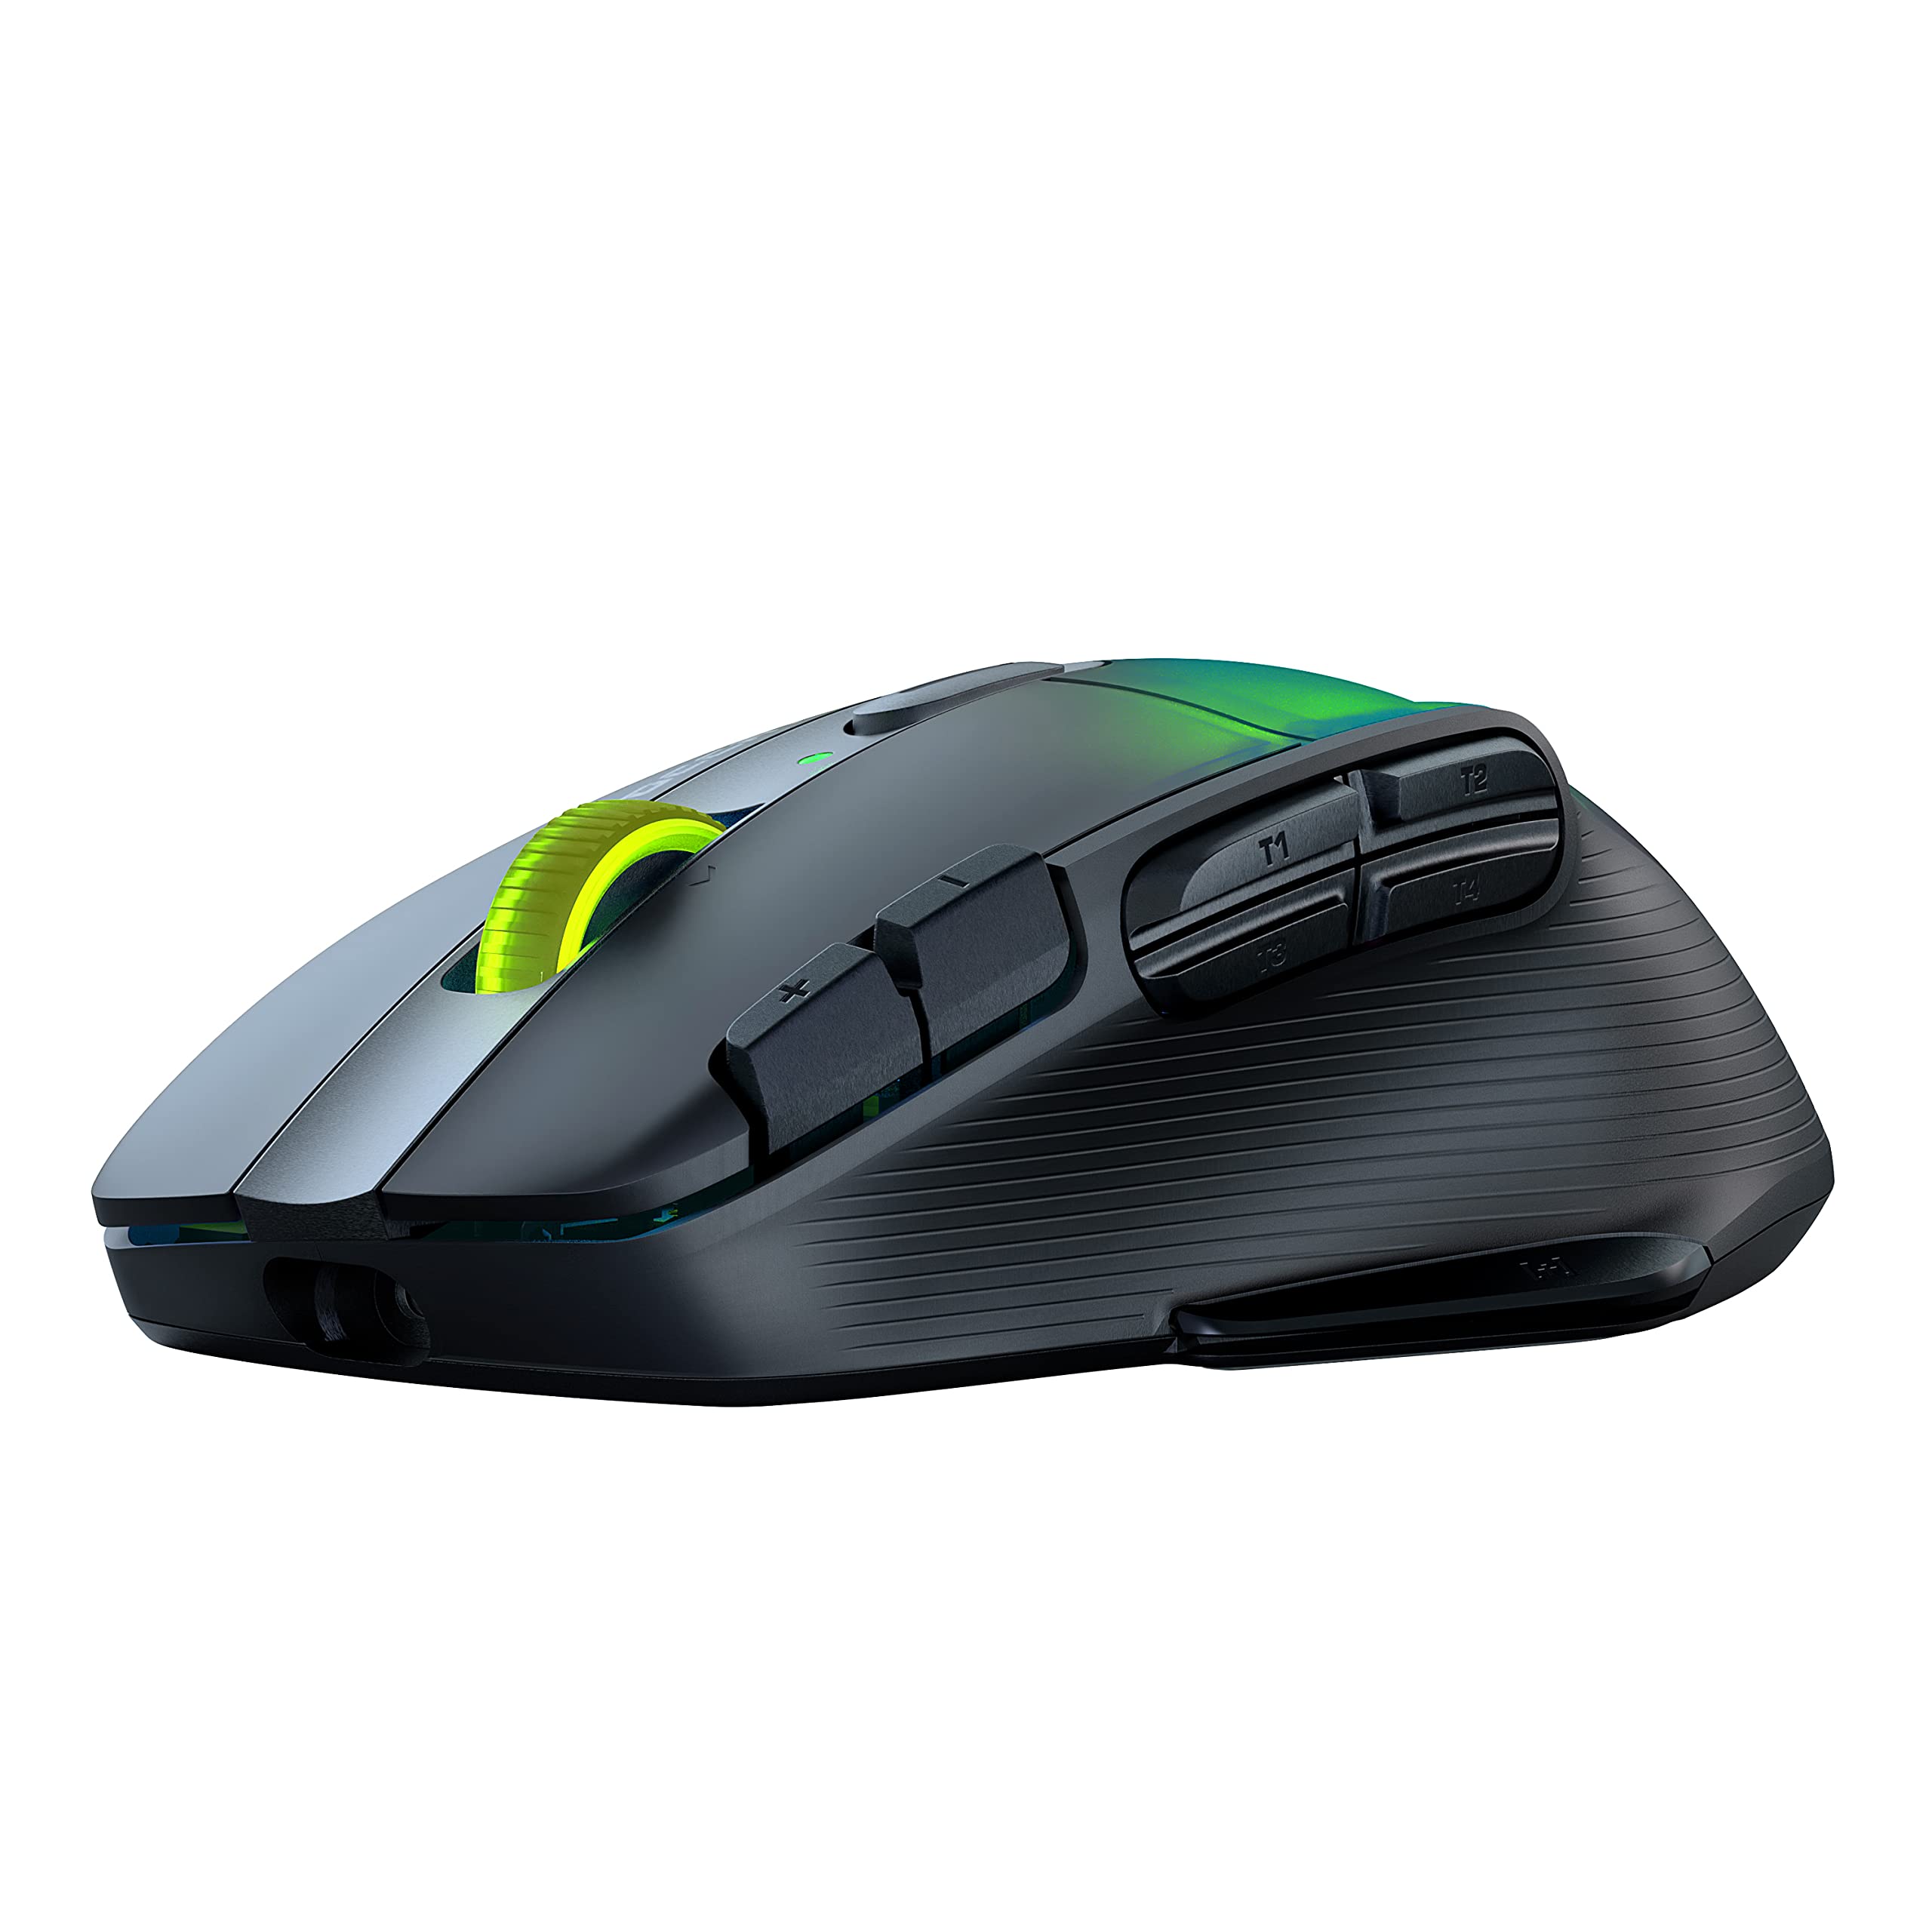 ROCCAT Kone XP Air – Wireless Customizable Ergonomic RGB Gaming Mouse, 19K DPI Optical Sensor, 100-hour Battery & Charging Dock, 29 Programmable Inputs & AIMO RGB Lighting, 4D Wheel – Black